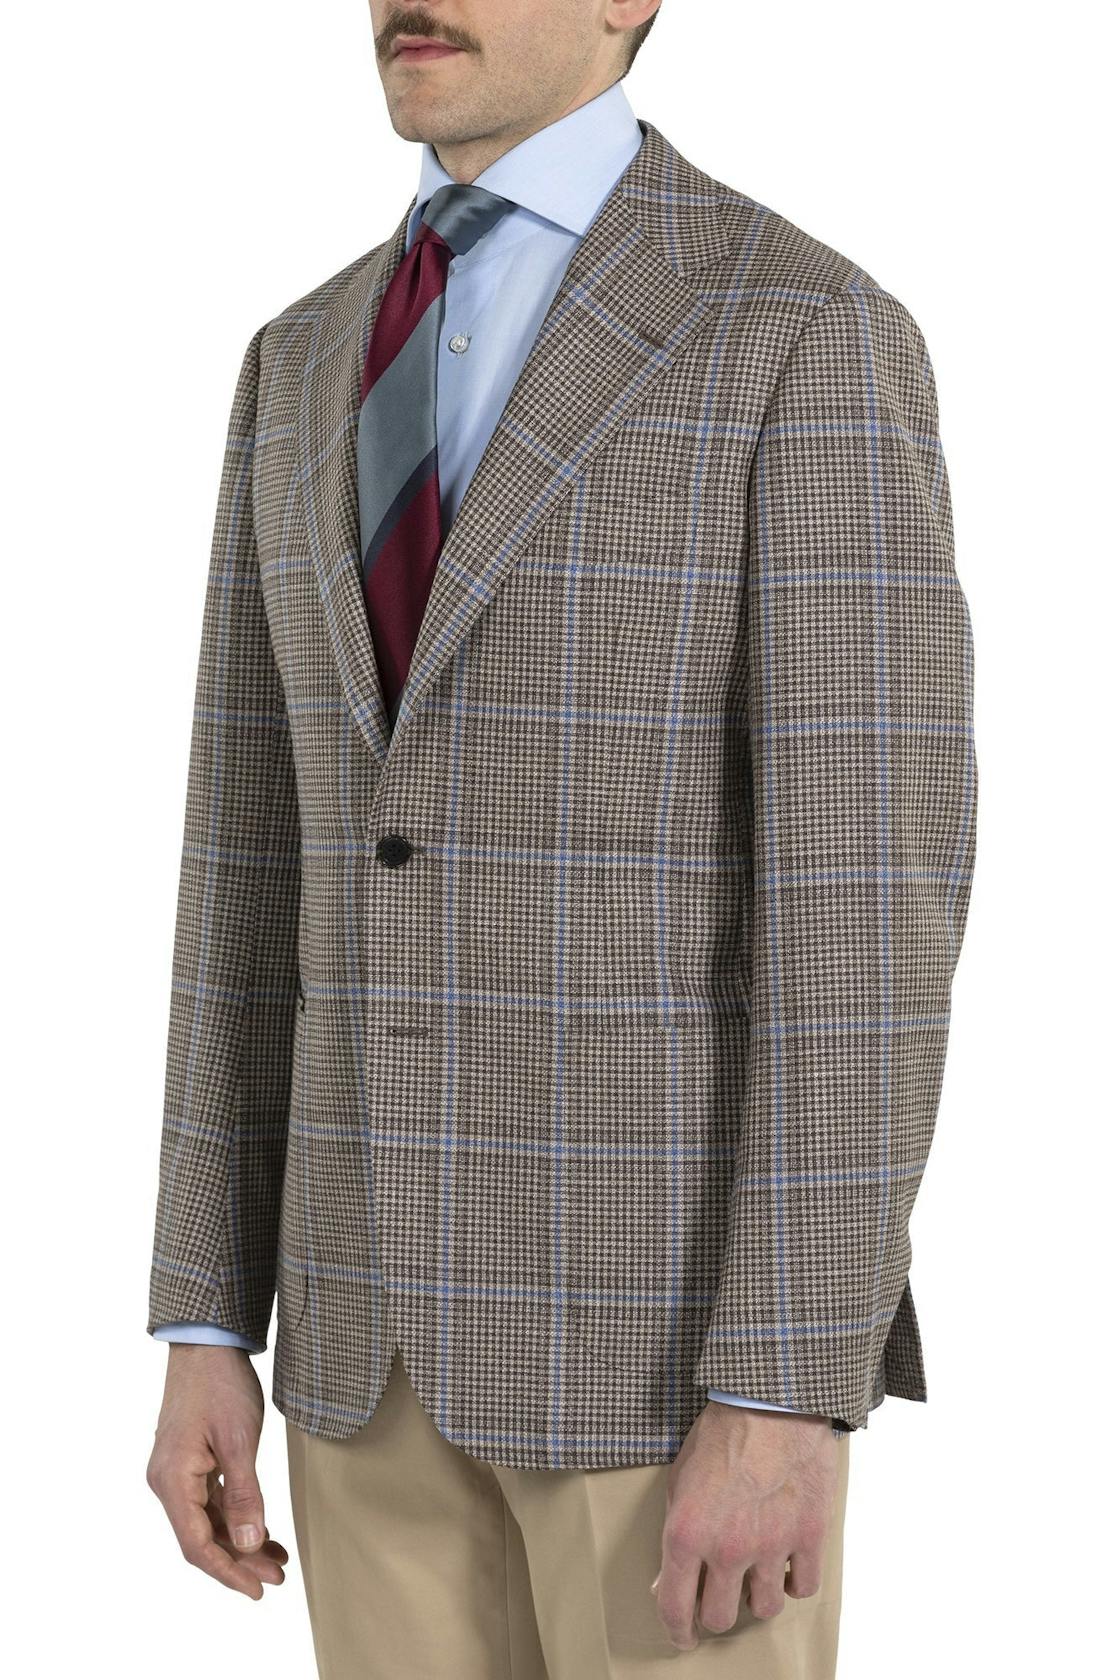 The Armoury by Ring Jacket Model 3 Brown/Blue Wool/Silk/Linen Windowpane Sport Coat